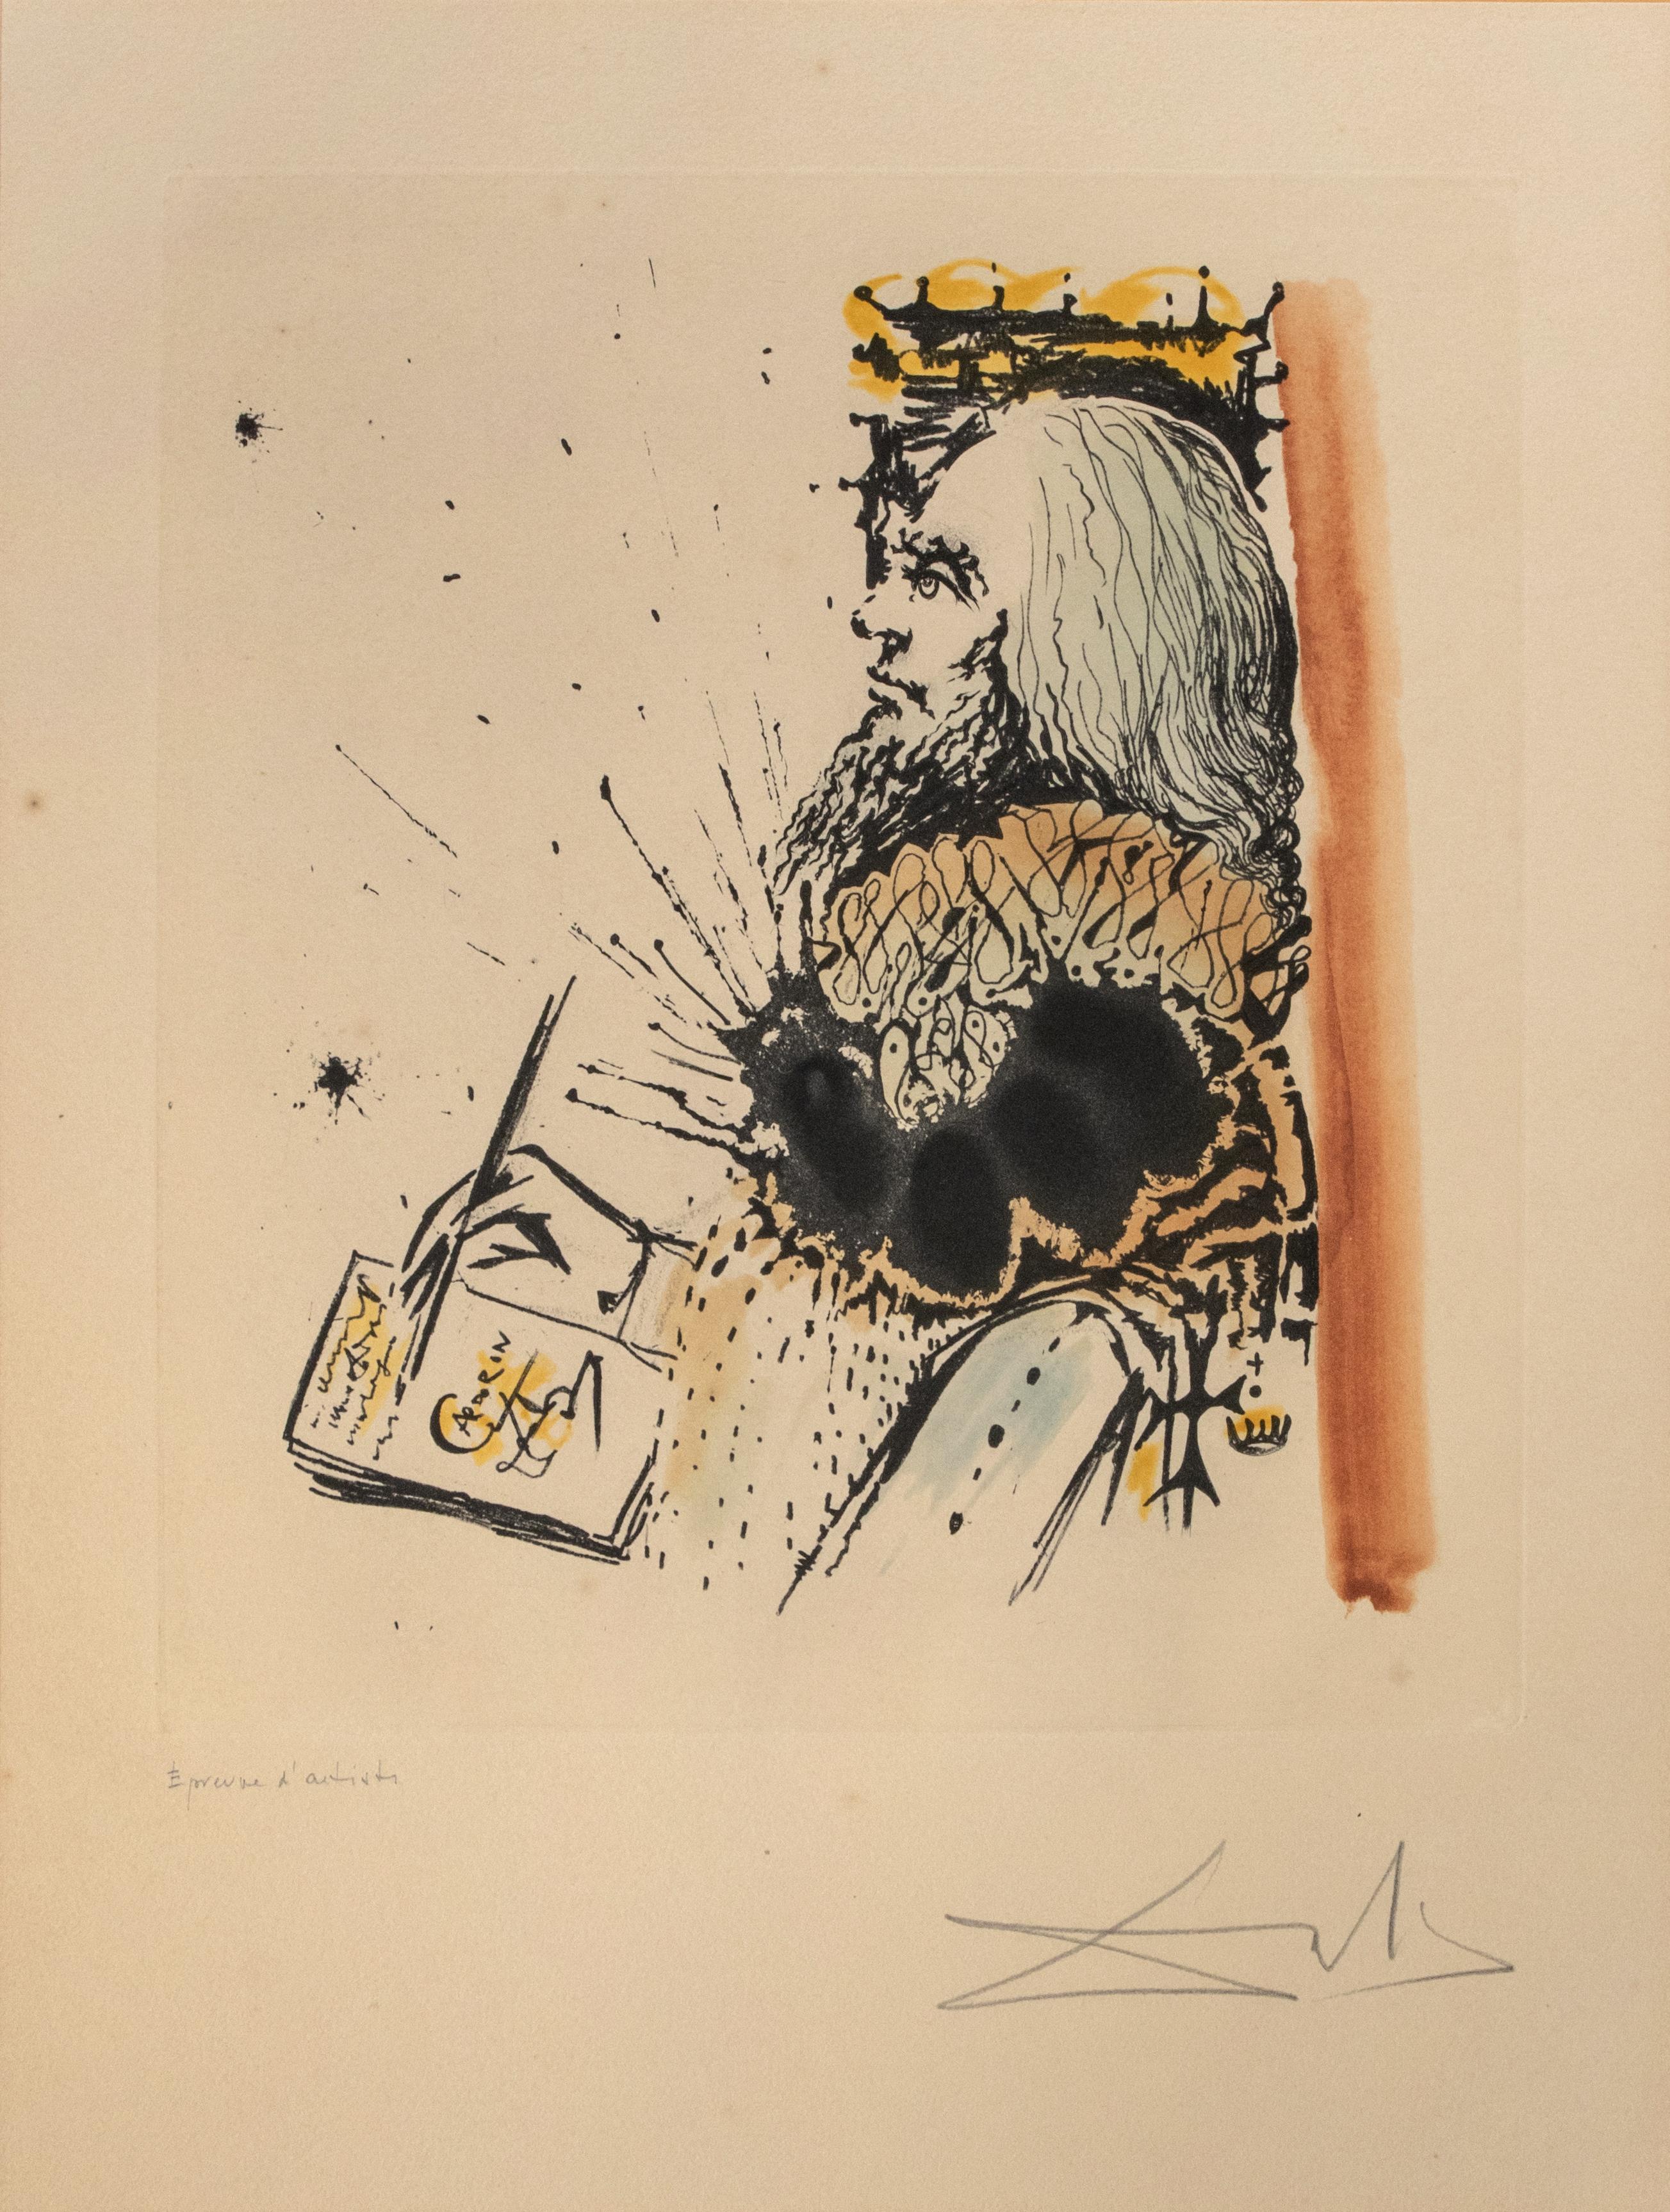 Portrait de Calderon - Aquatinte et gravure attr. à Salvador Dalì - 1971